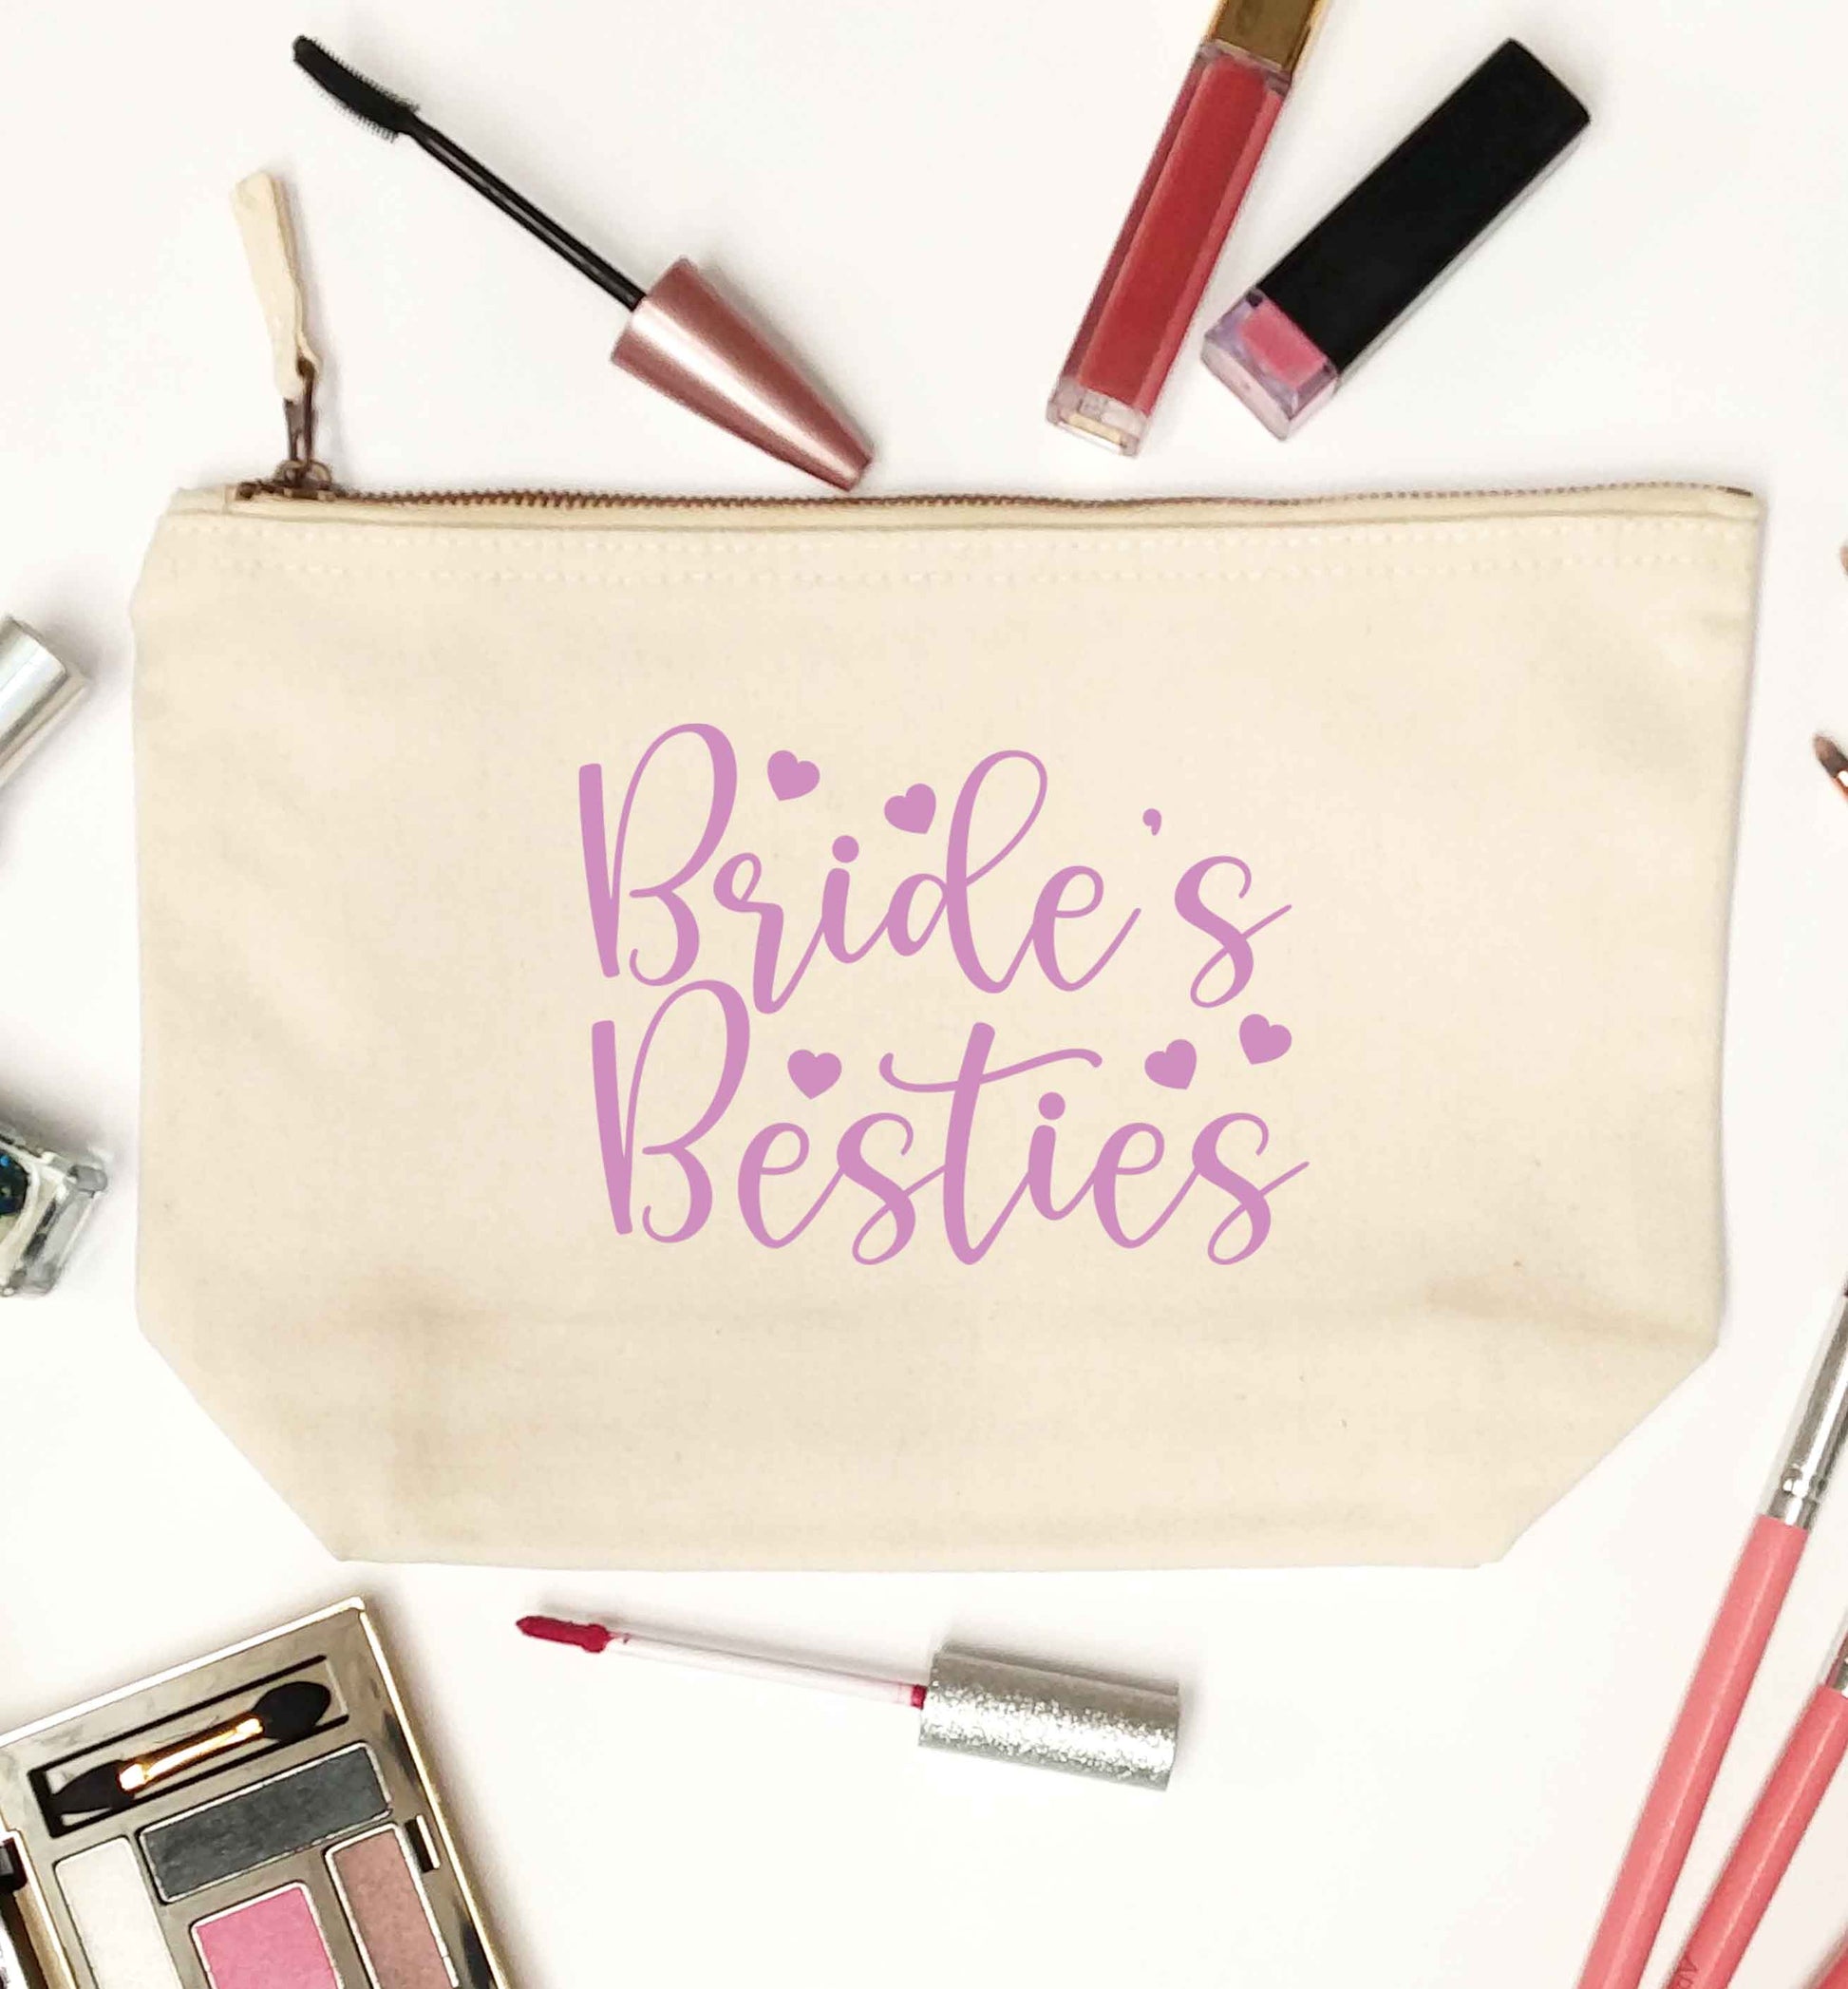 Brides besties natural makeup bag